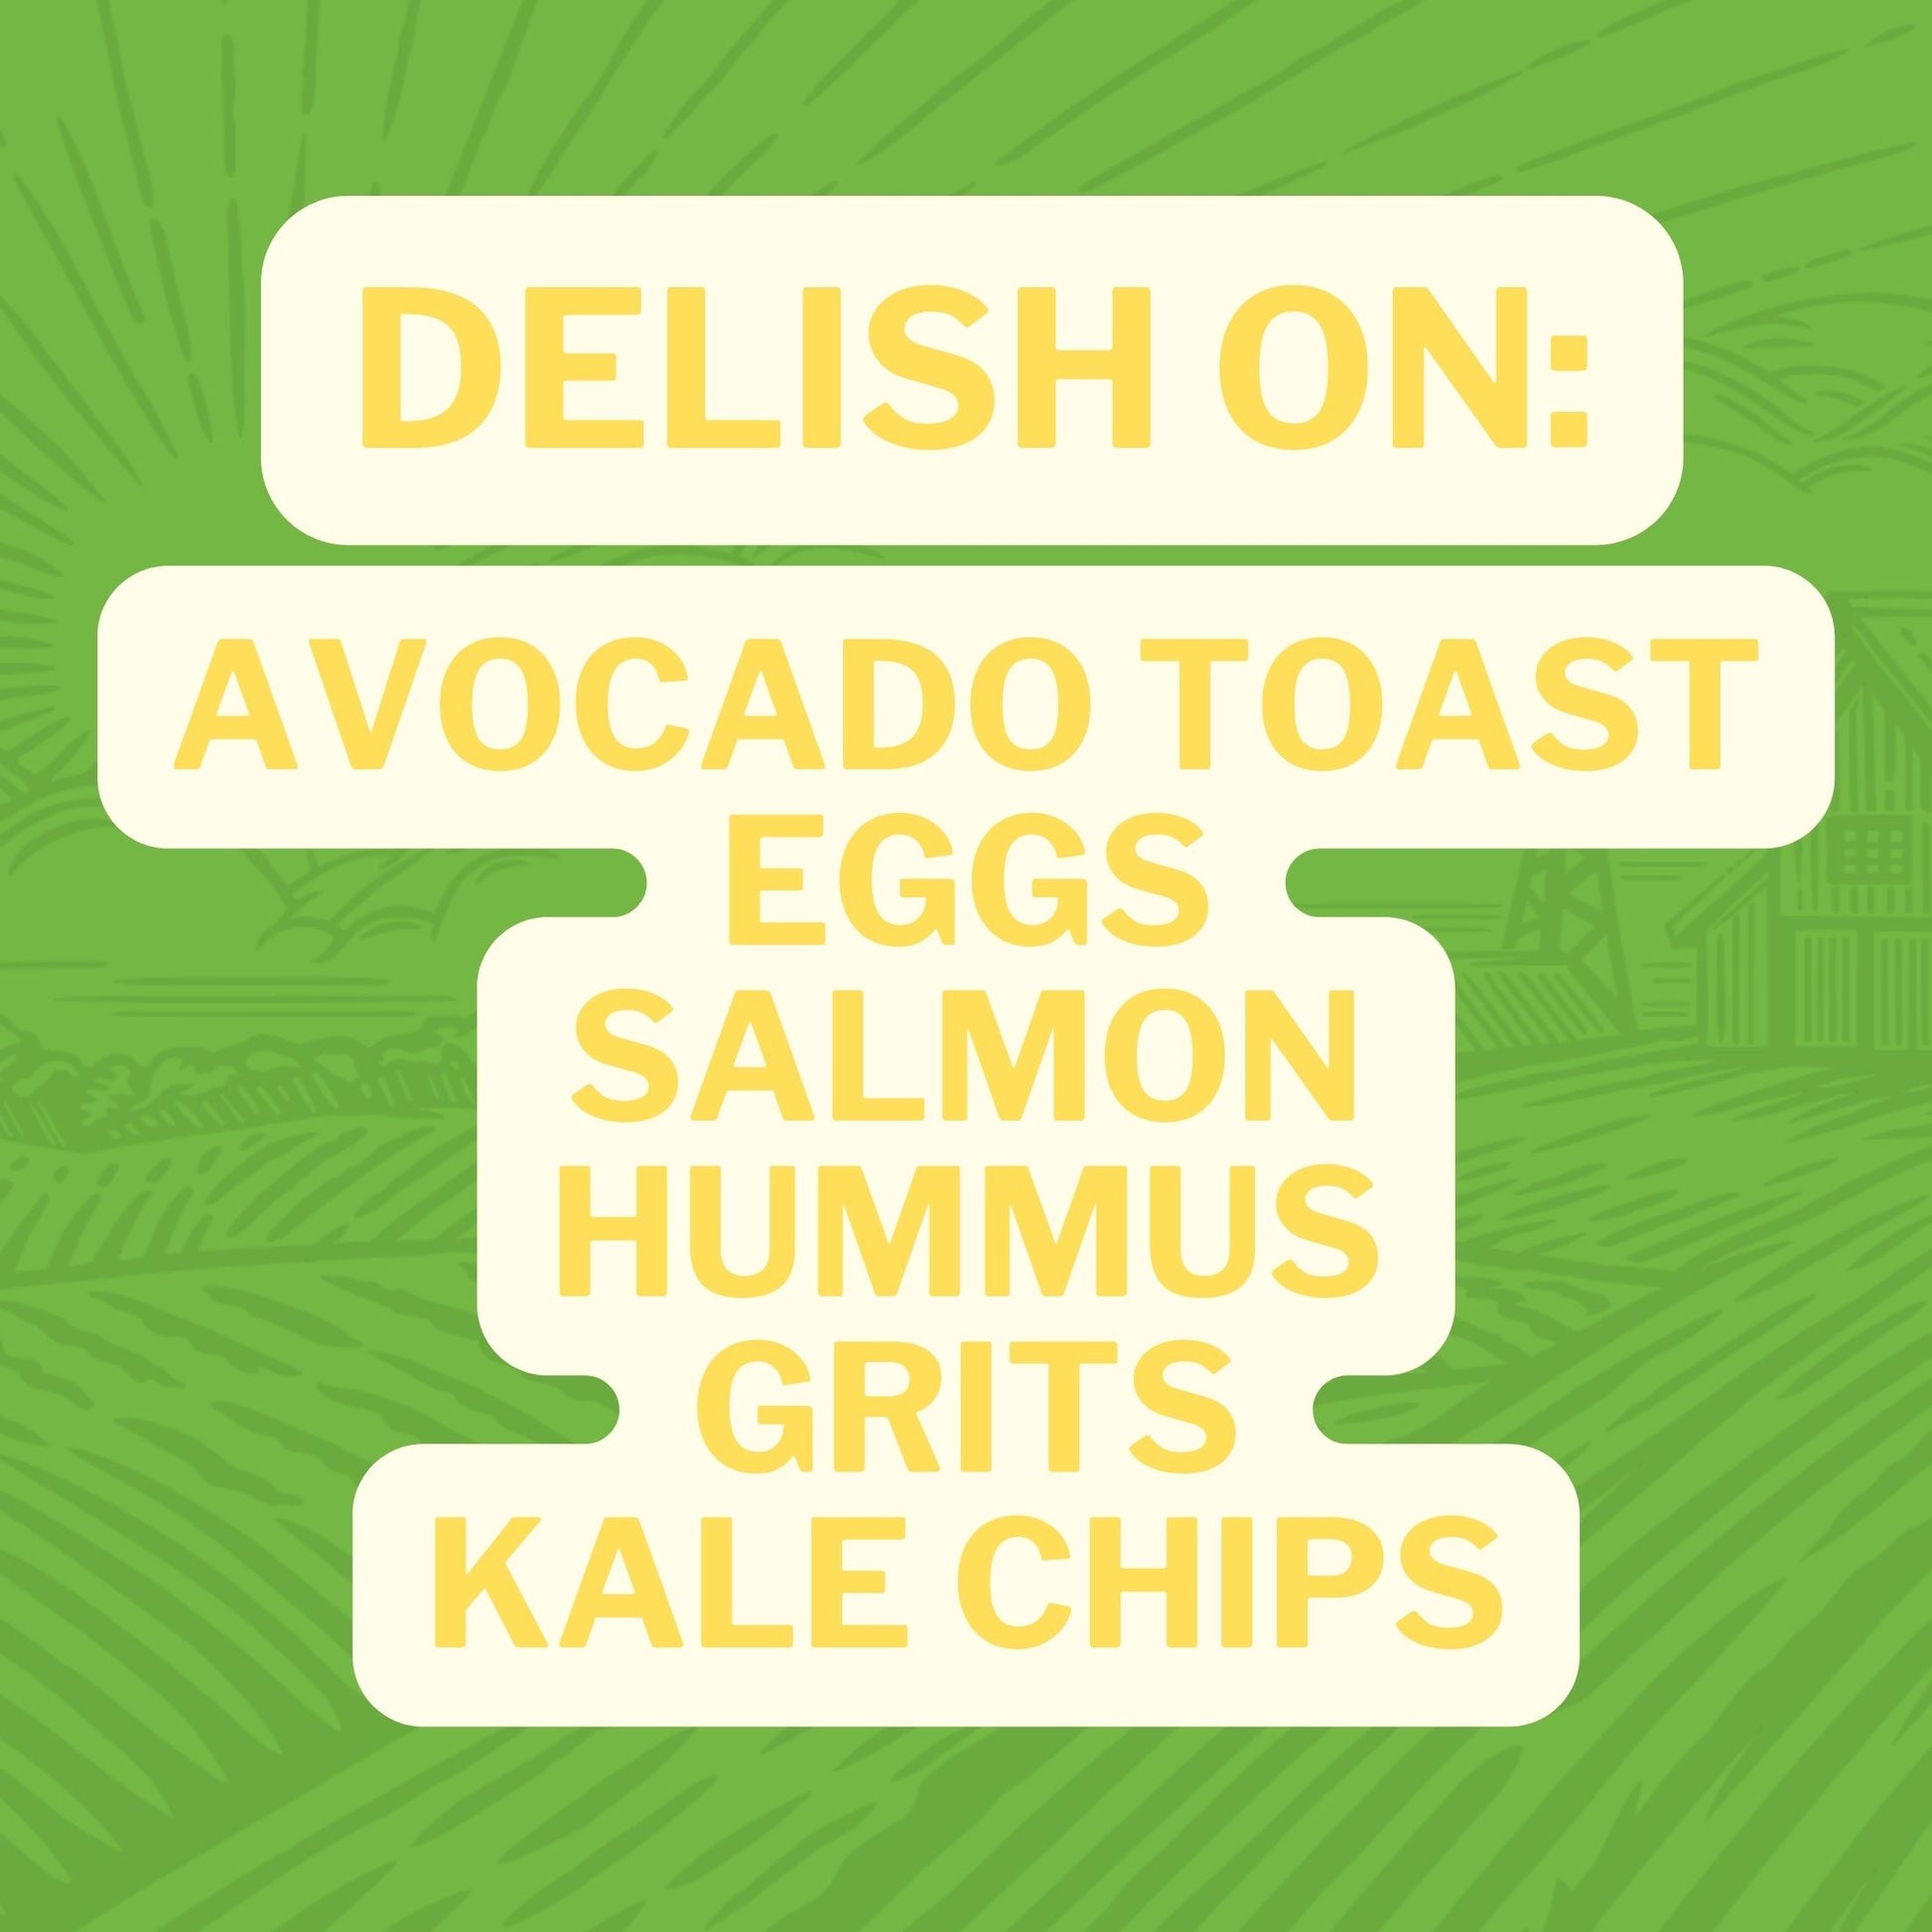 Brunch Life Everything Bagel Seasoning is Delish On: Avocado Toast, Eggs, Salmon, Hummus, Grits, Kale Chips